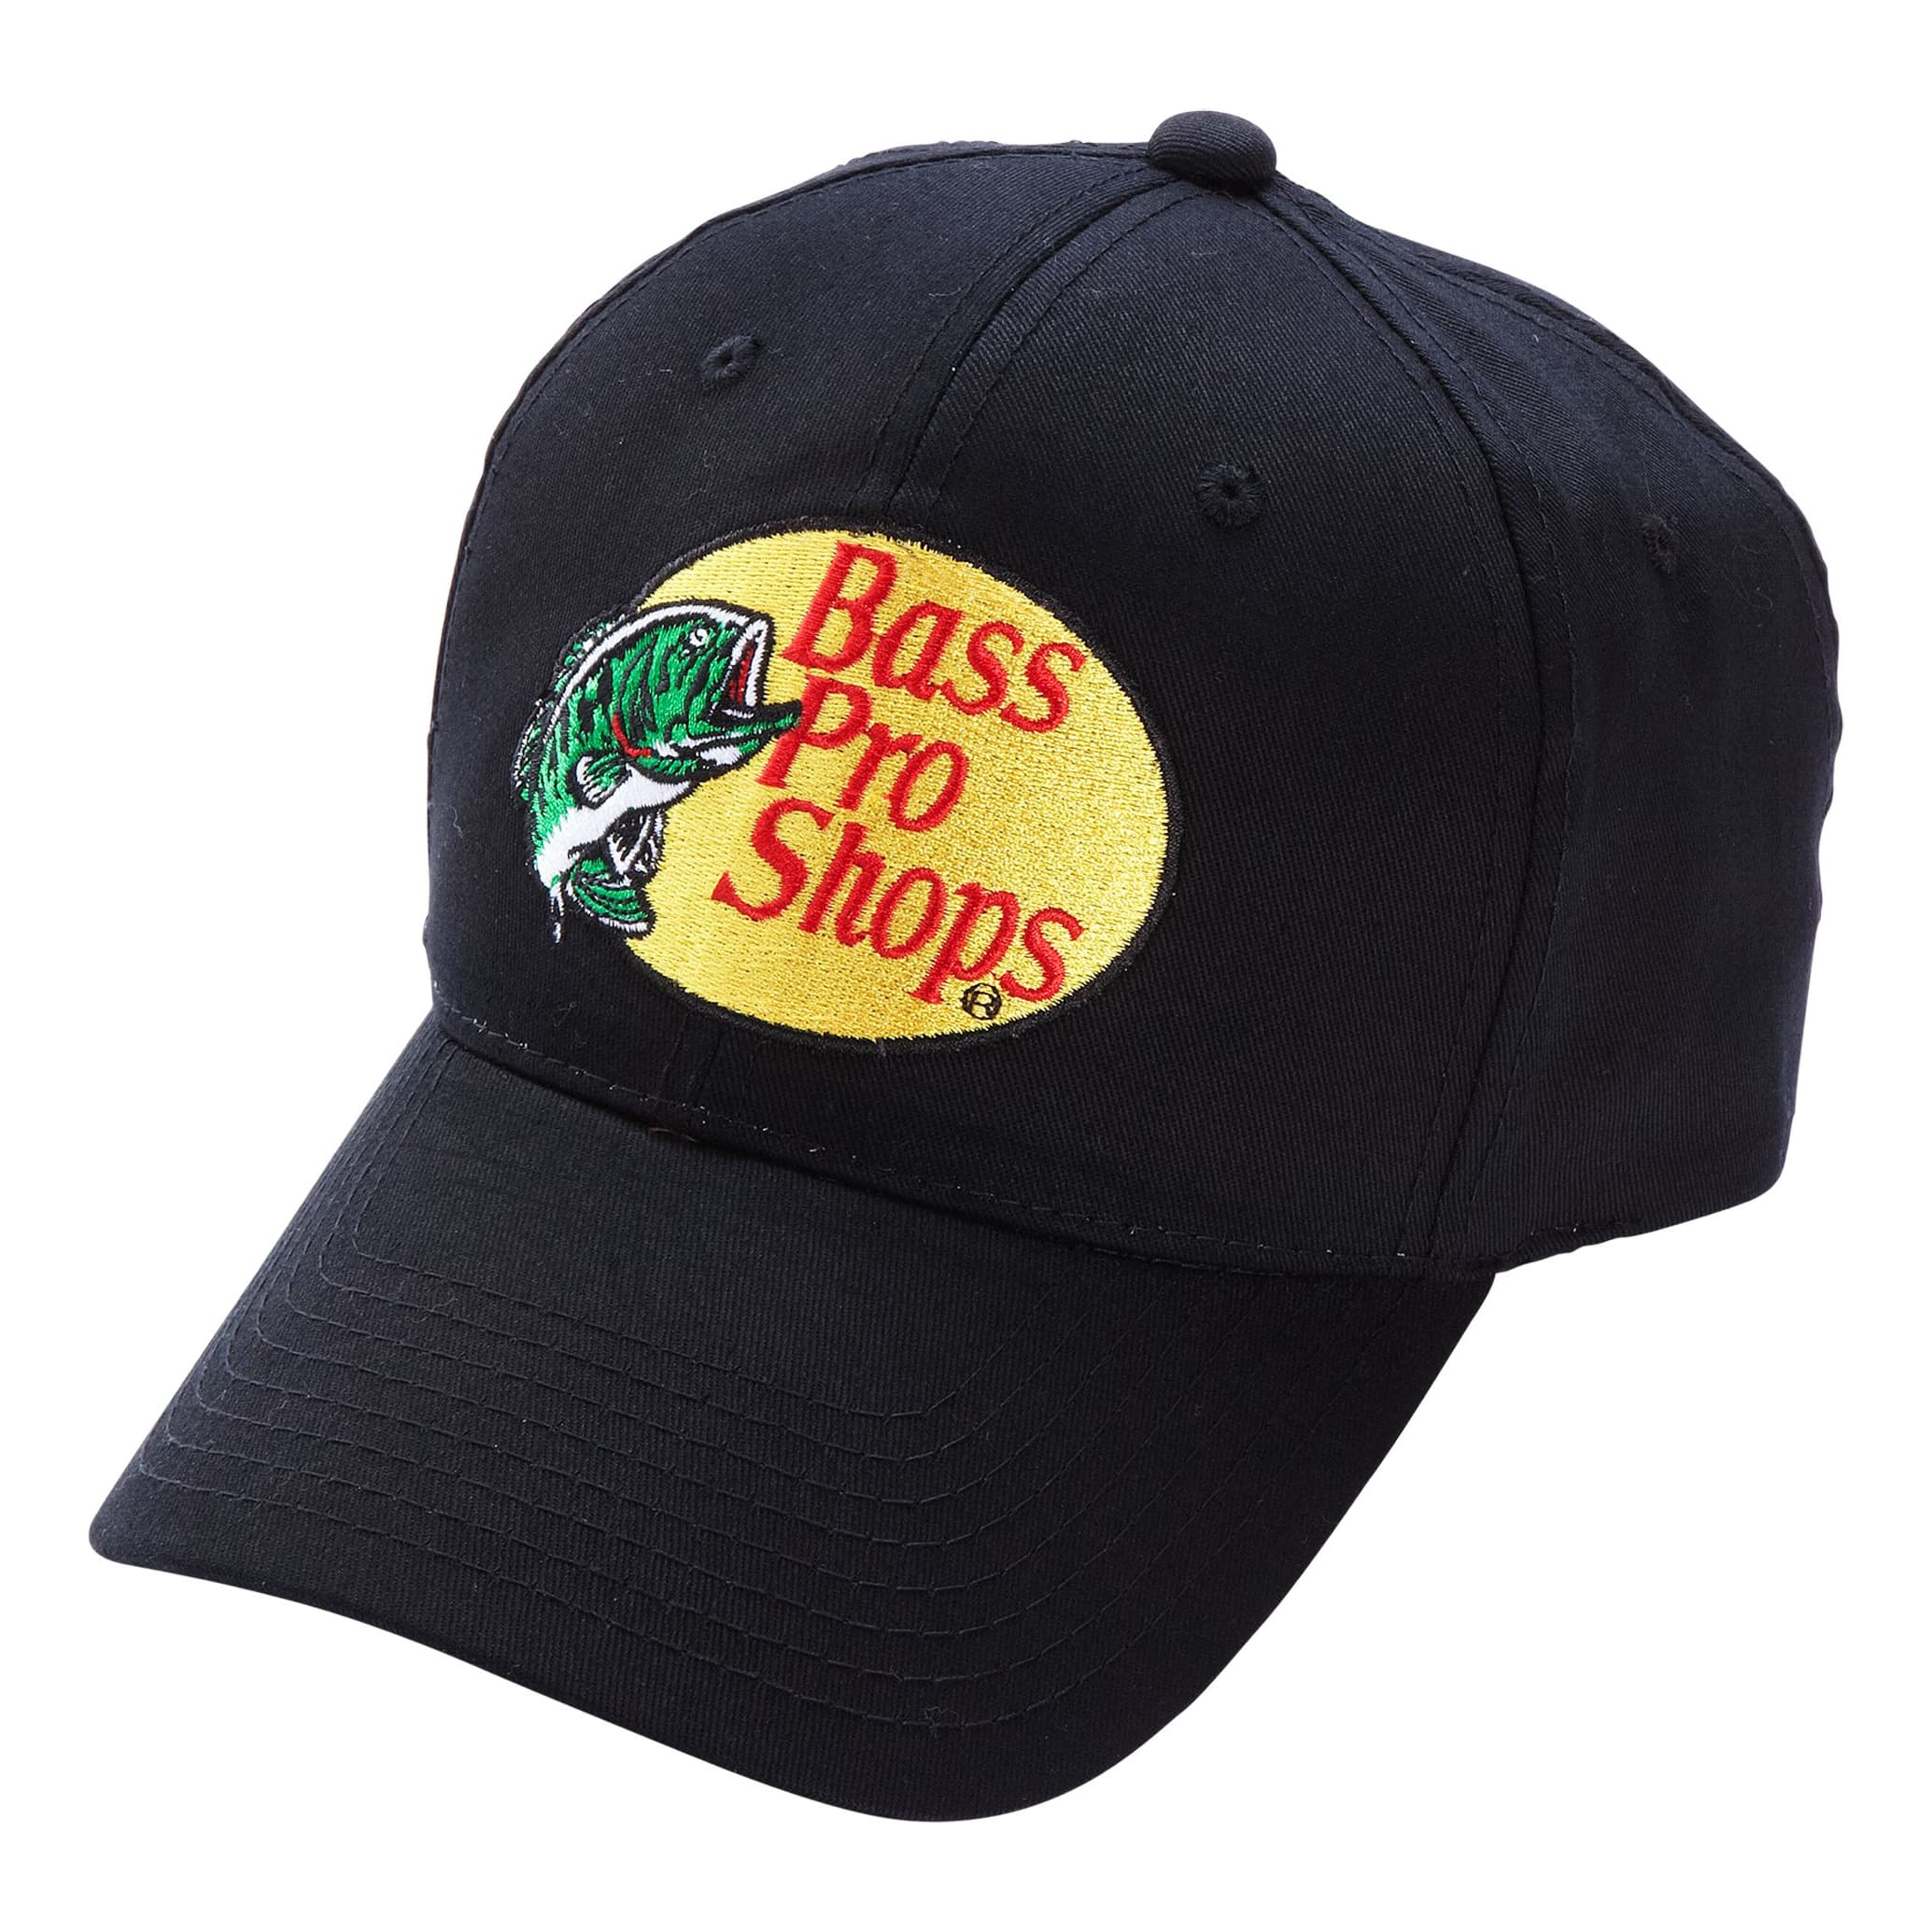 Bass Pro Shops black